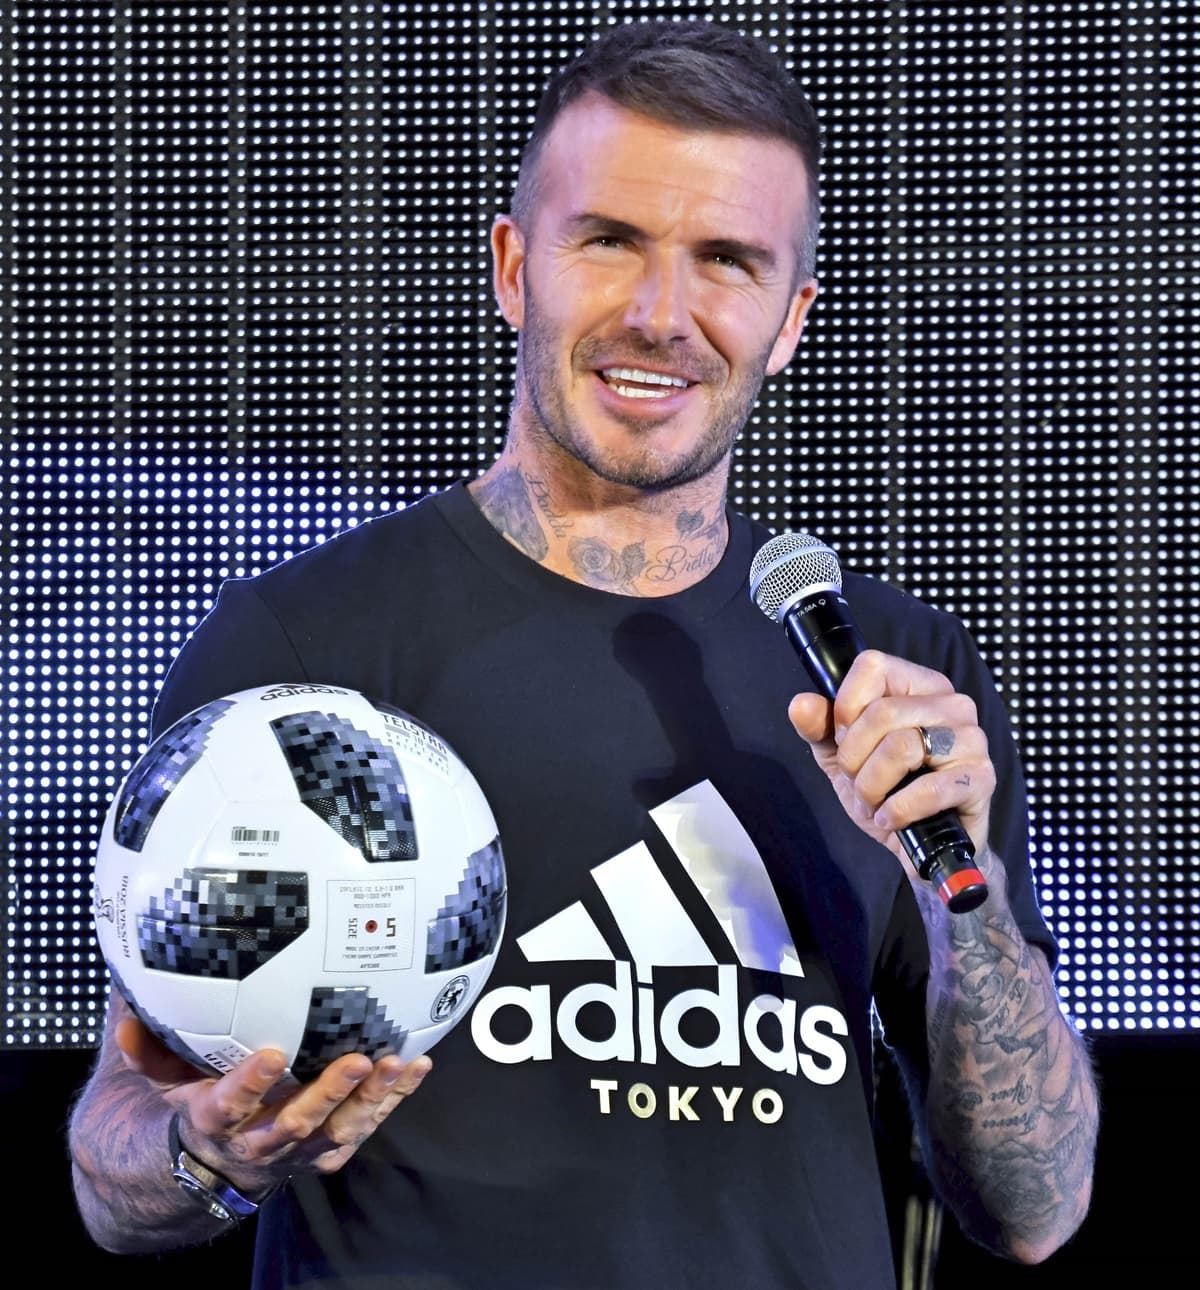 David Beckham showcasing Adidas' triangular mountain logo that represents the challenges athletes face